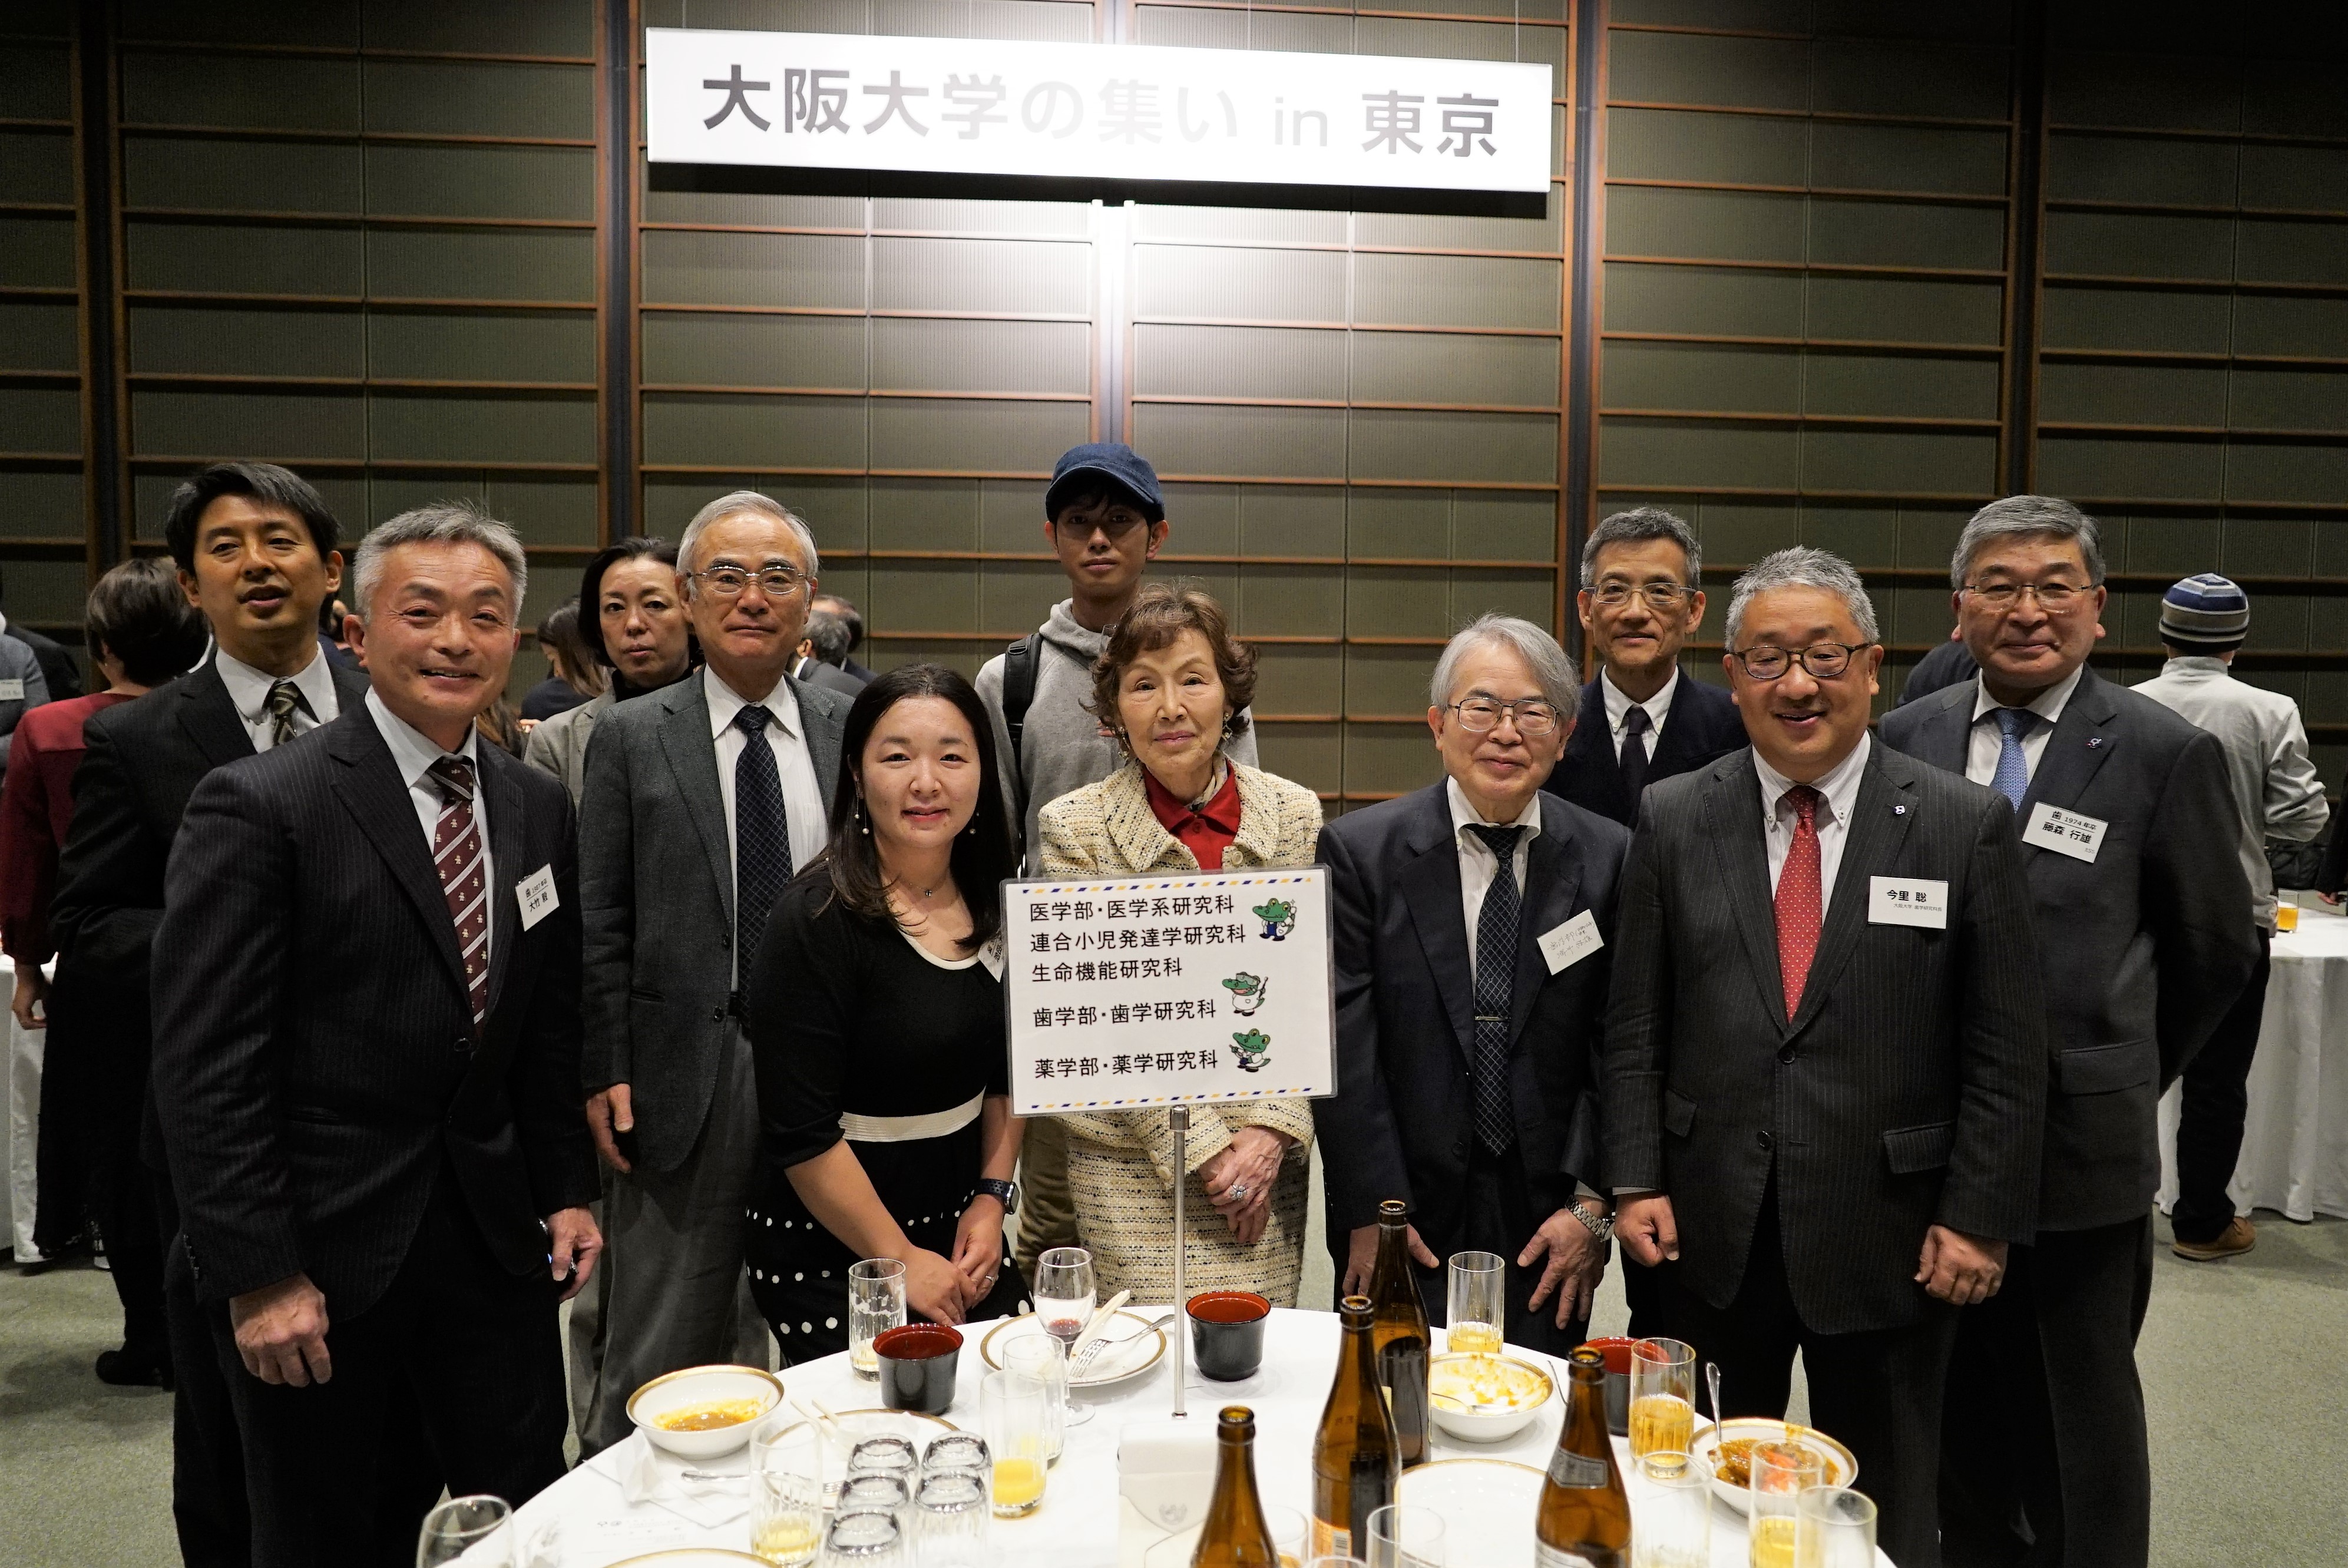 11th Osaka University Alumni Reunion in Tokyo held